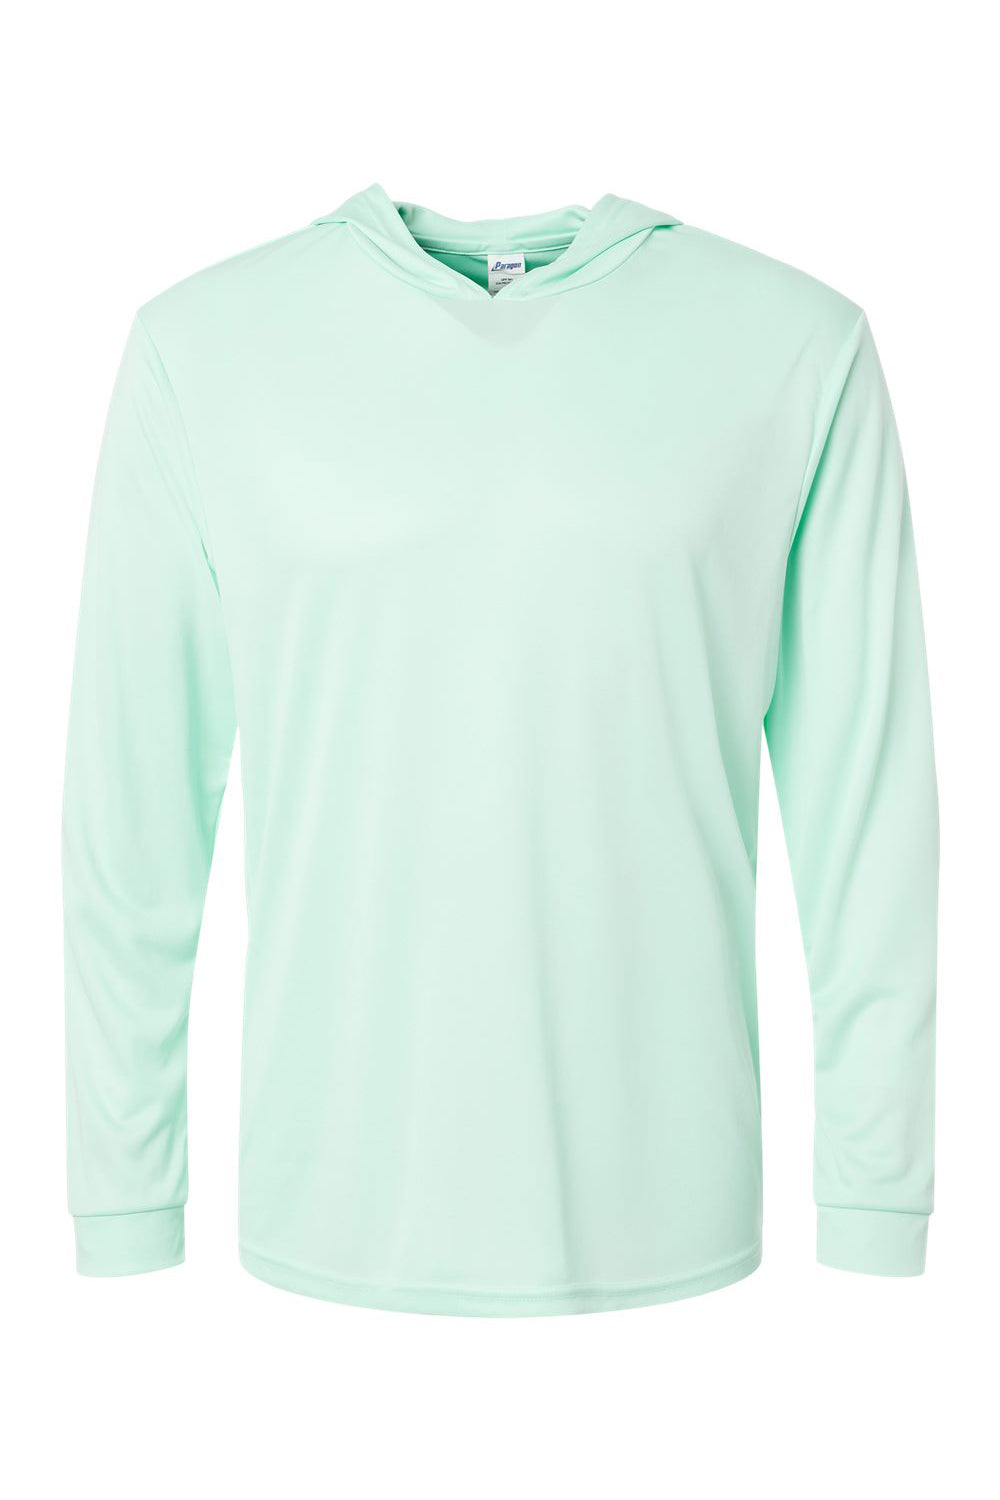 Paragon 220 Mens Bahama Performance Long Sleeve Hooded T-Shirt Hoodie Mint Green Flat Front